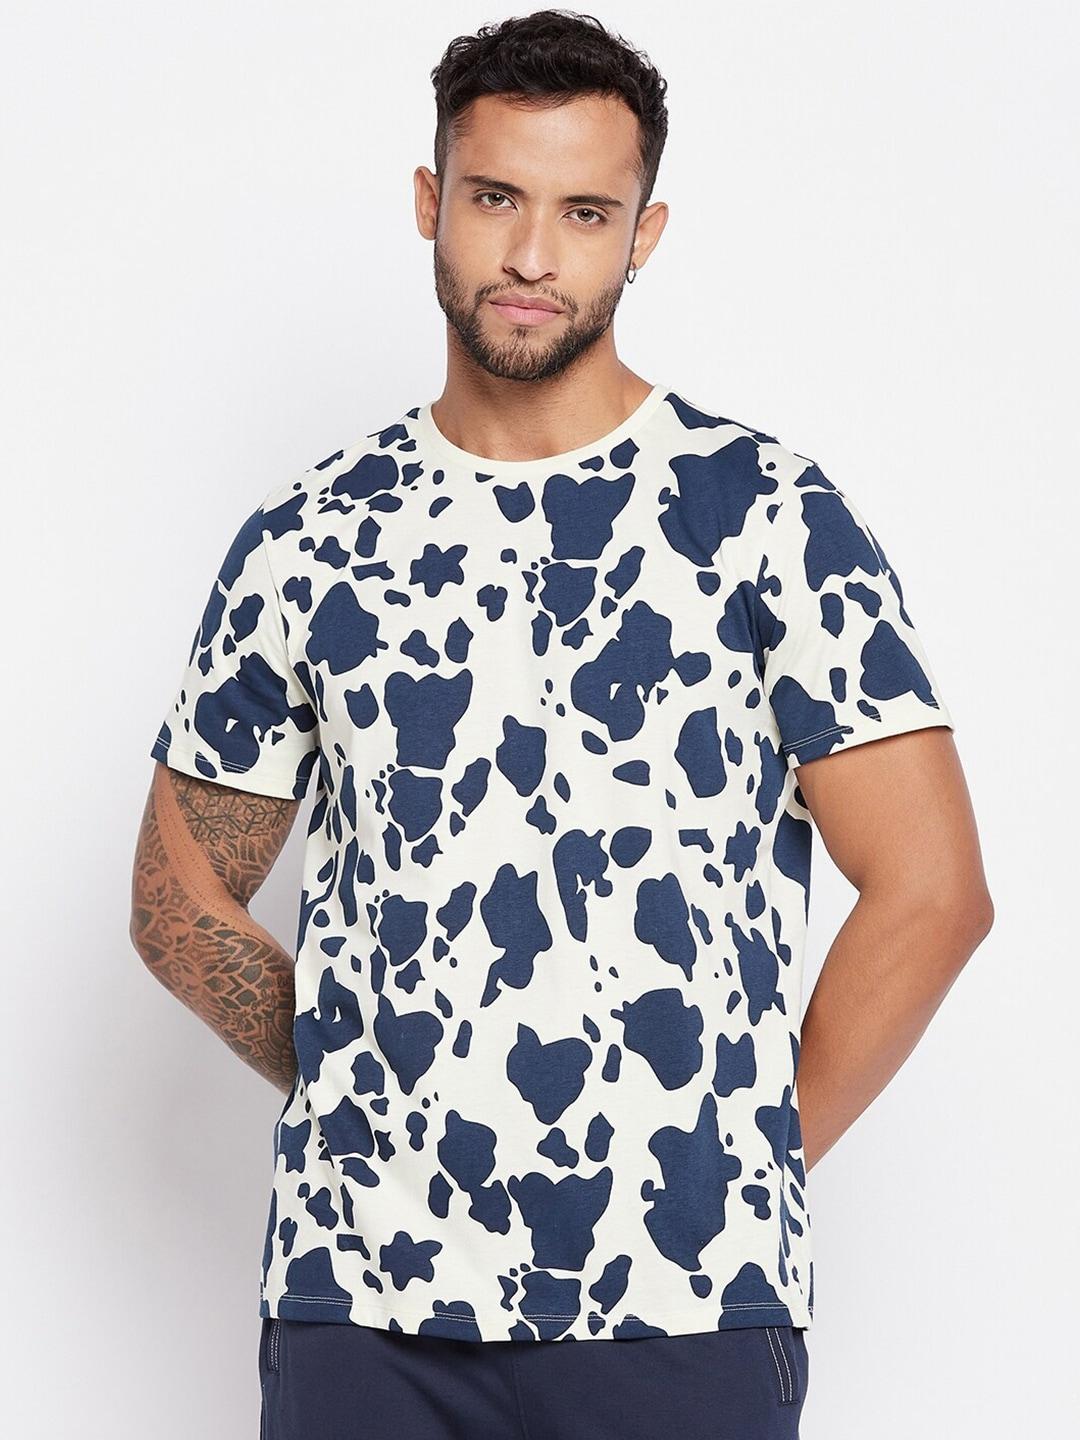 edrio-round-neck-abstract-printed-cotton-t-shirt